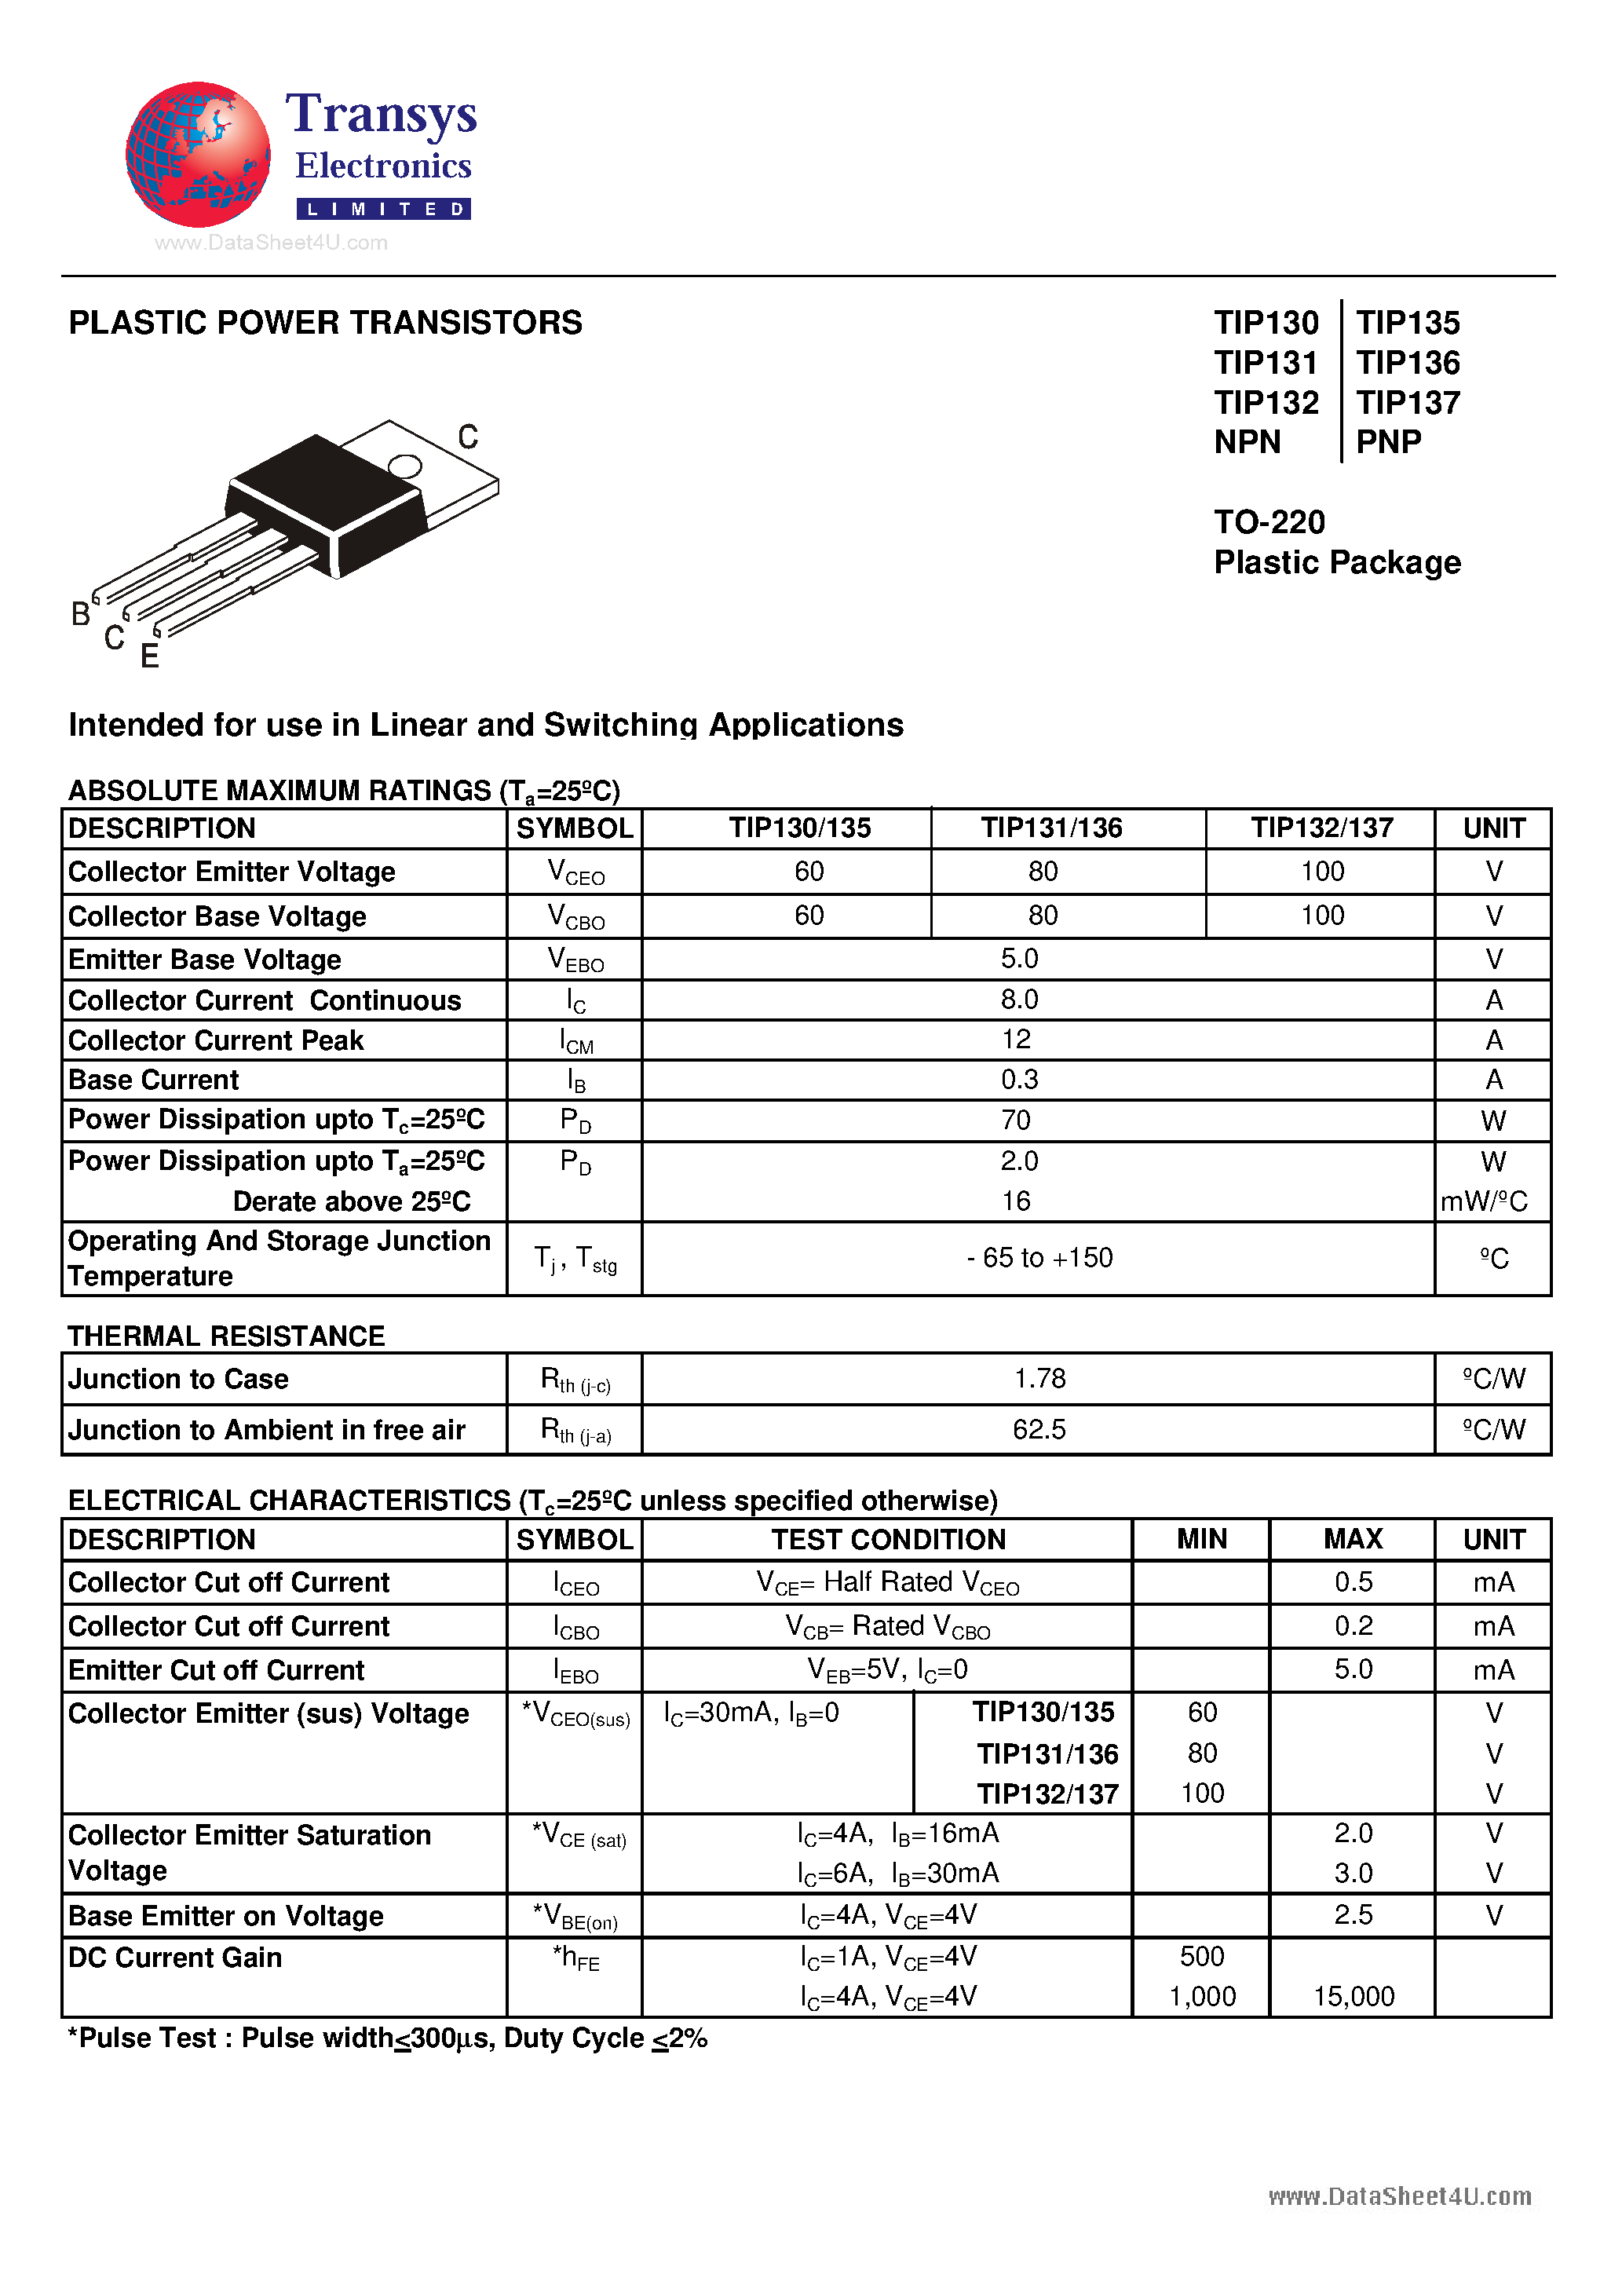 Даташит TIP130 - (TIP130 - TIP137) PLASTIC POWER TRANSISTORS страница 1